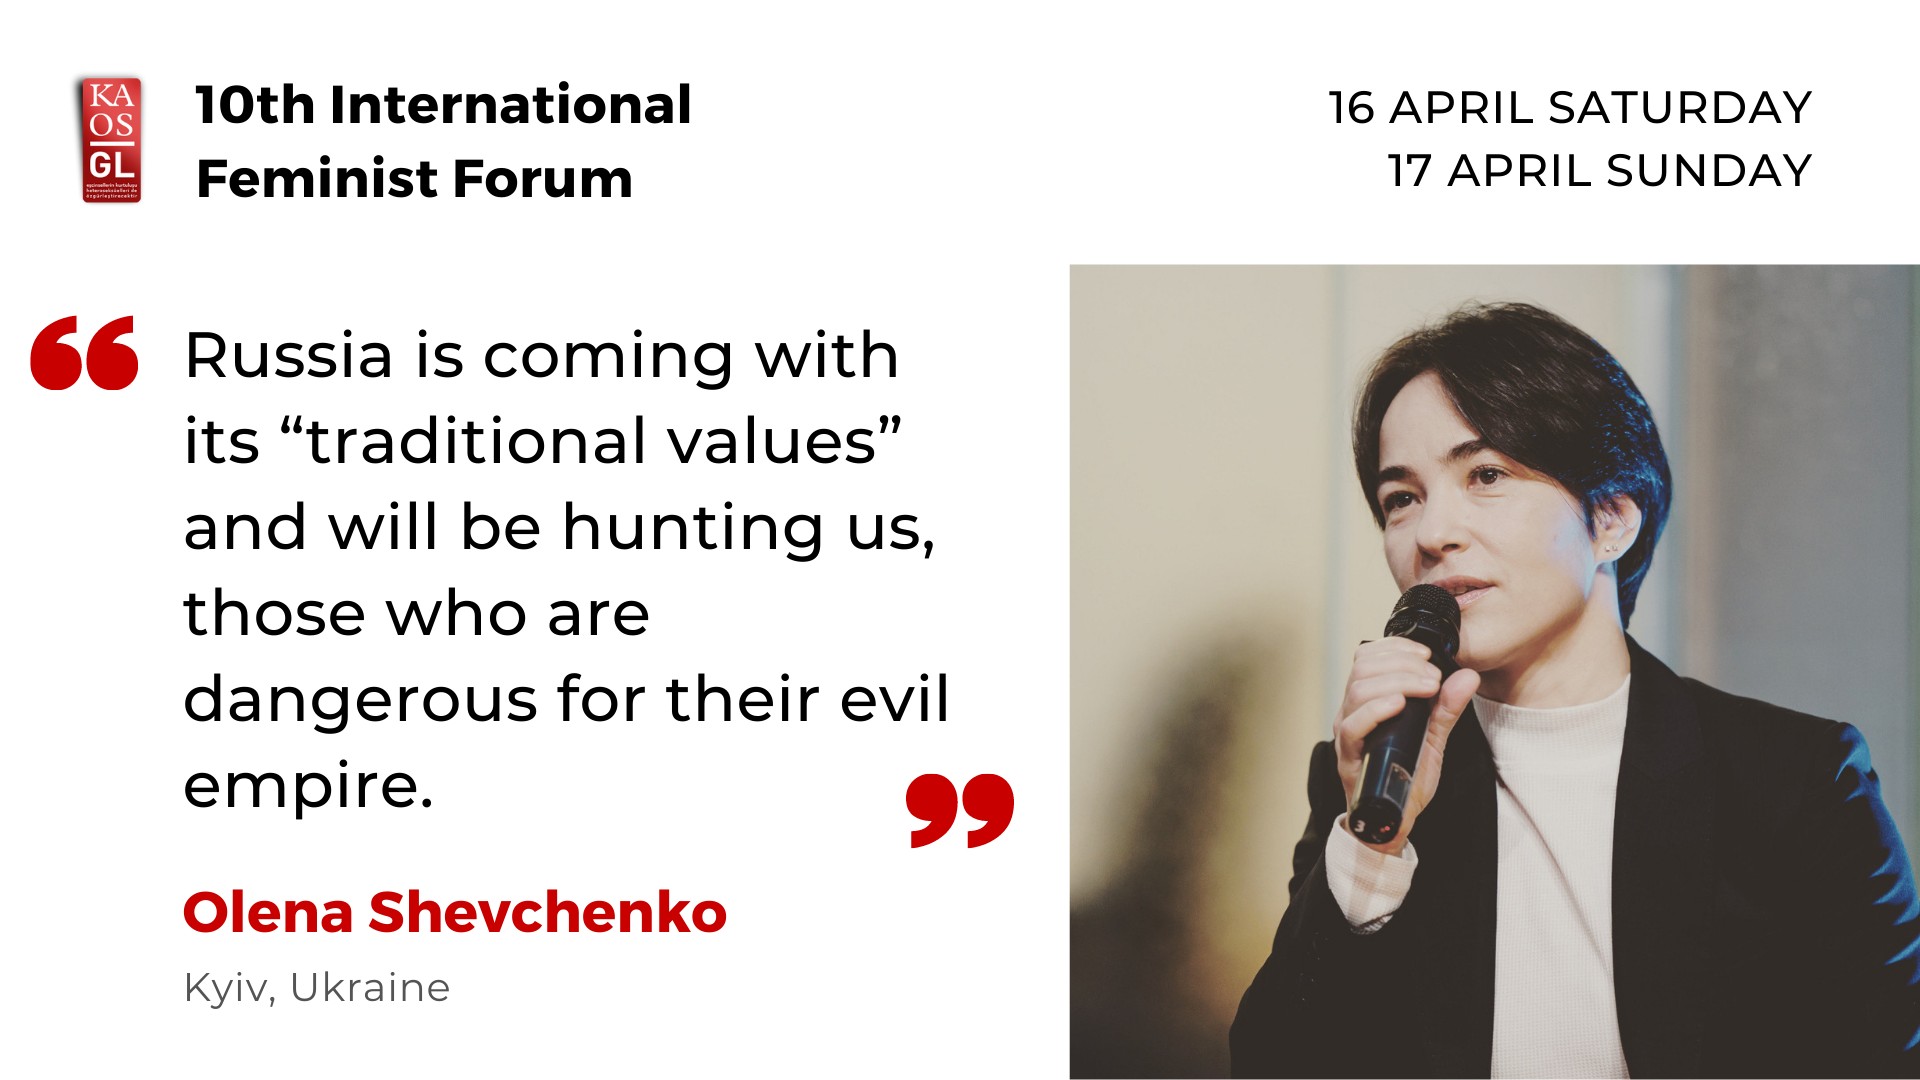 Meet Feminist Forum speakers: Olena Shevchenko Kaos GL - News Portal for LGBTI+